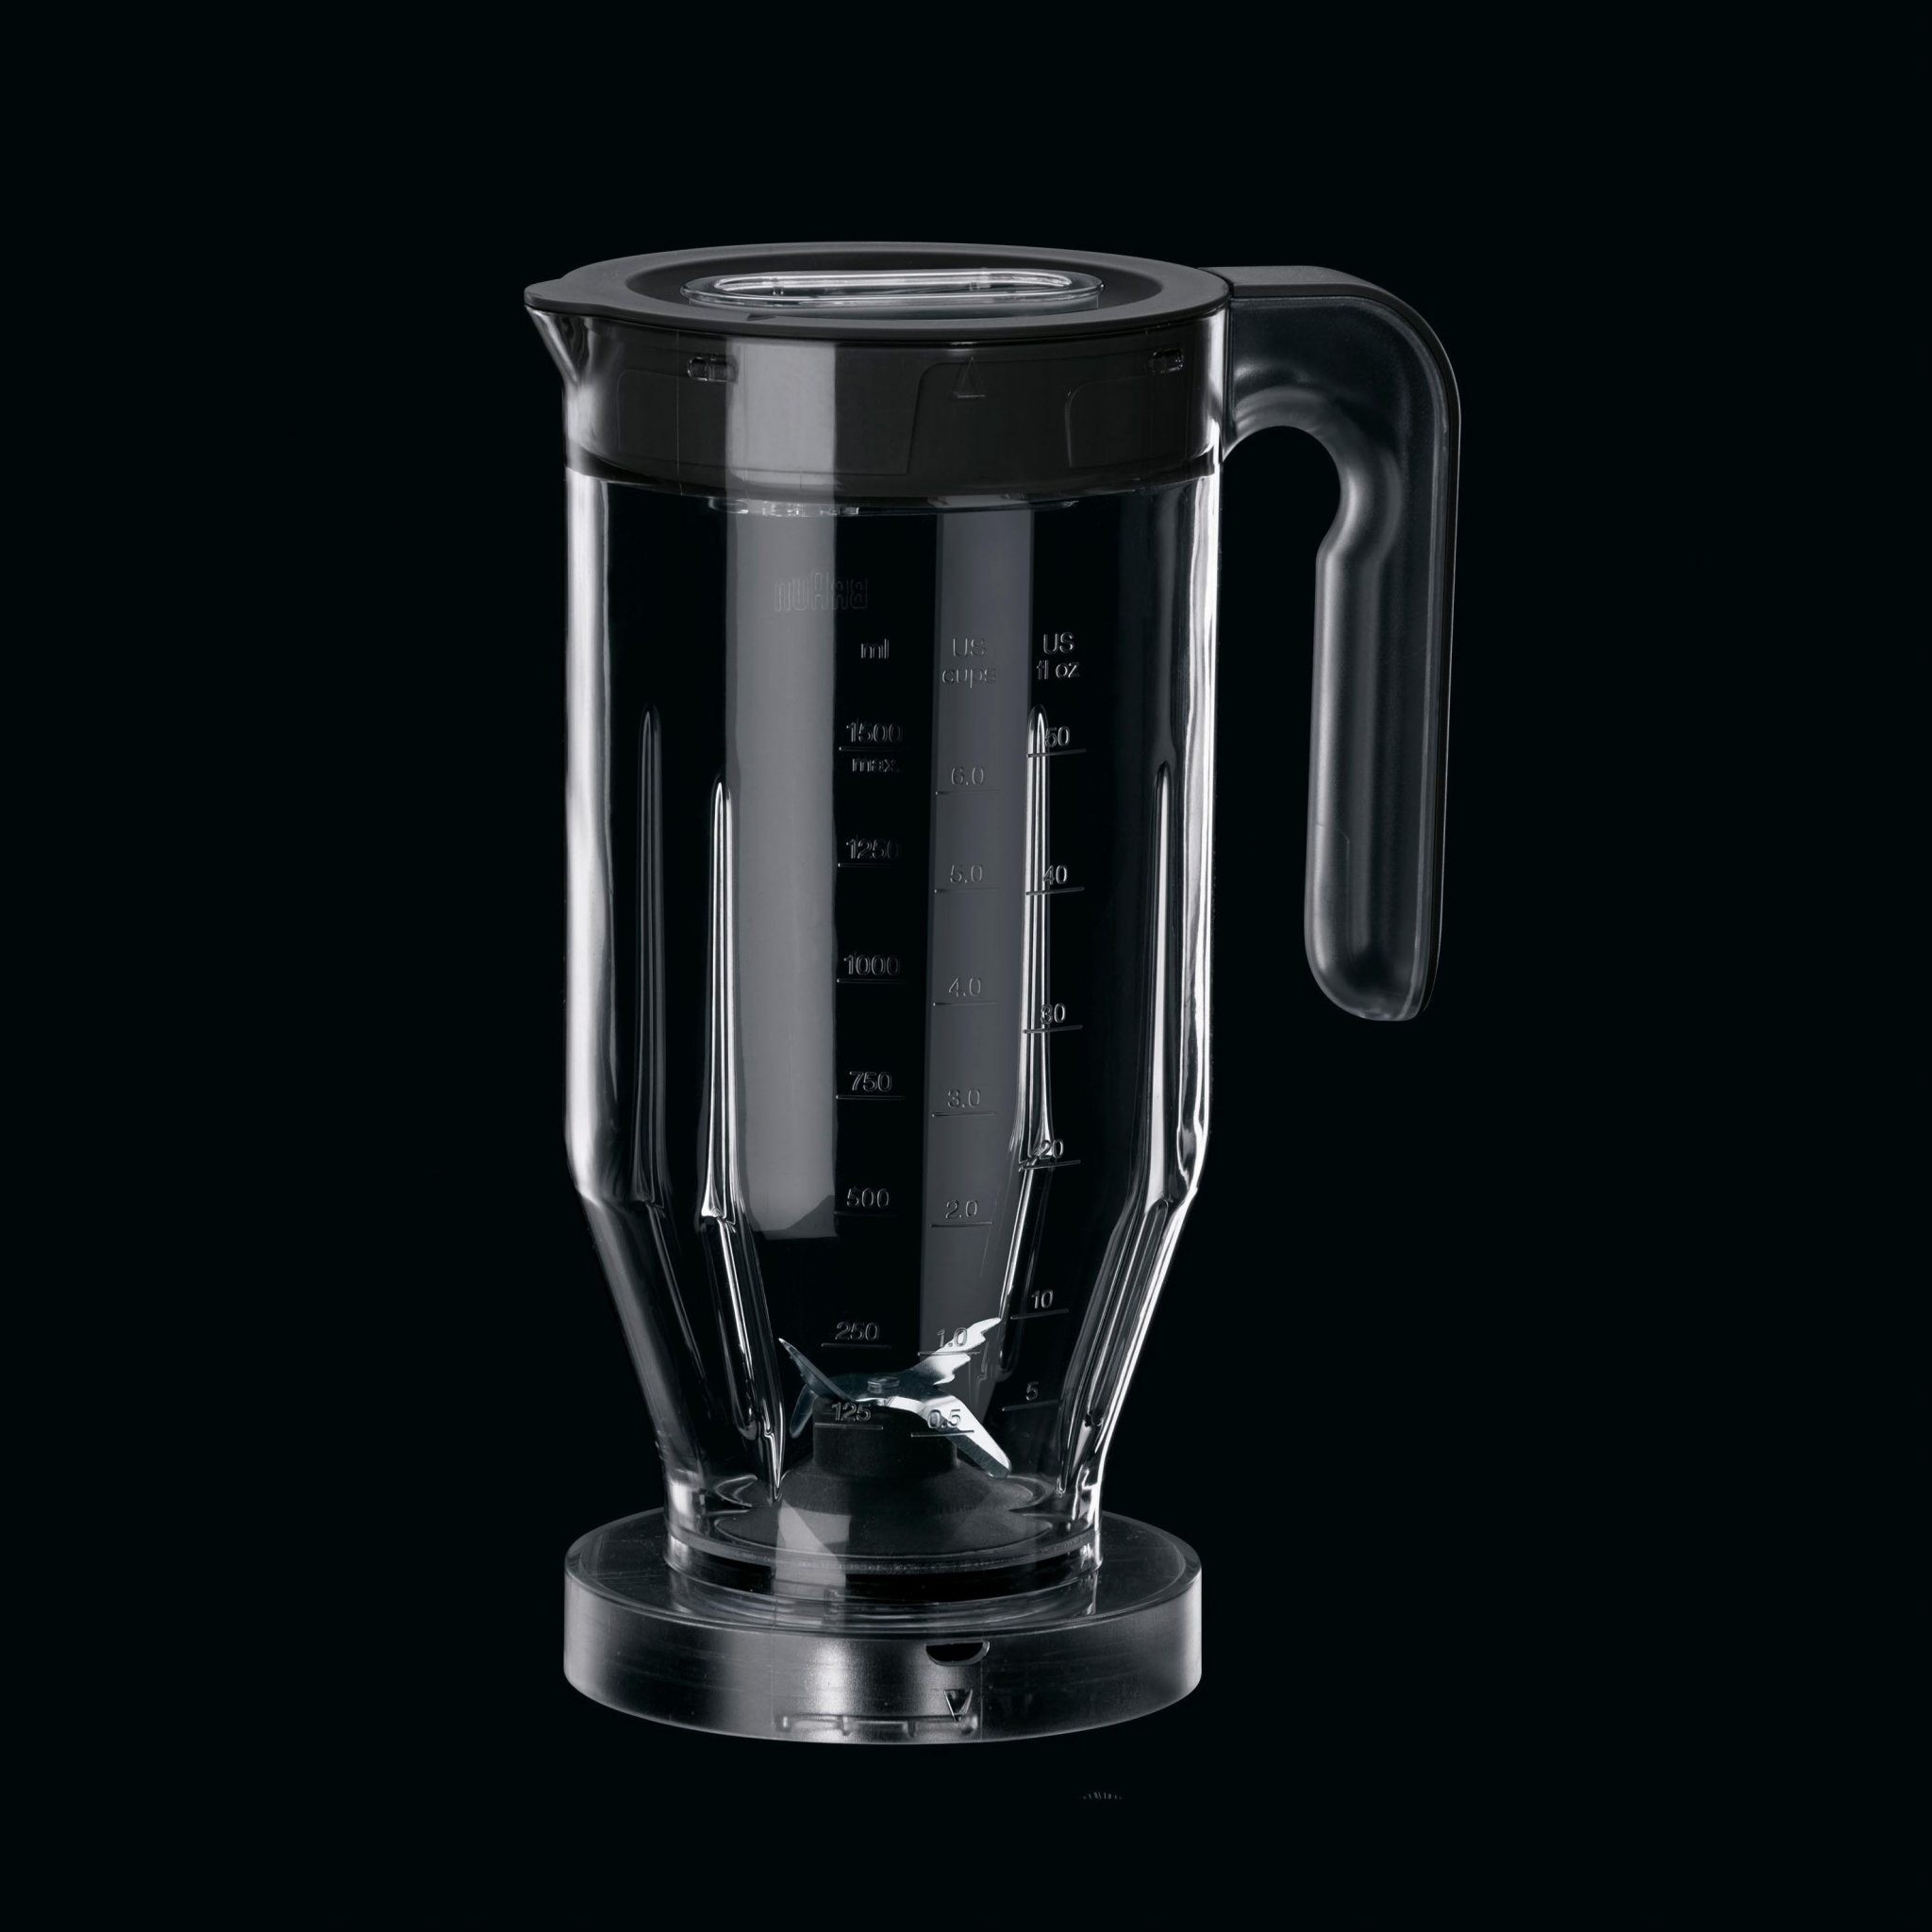 braun-keukenmachine-met-kookfunctie-fp-5150-1000-w-kom-2-liter-zwart-scaled-1-2.jpg